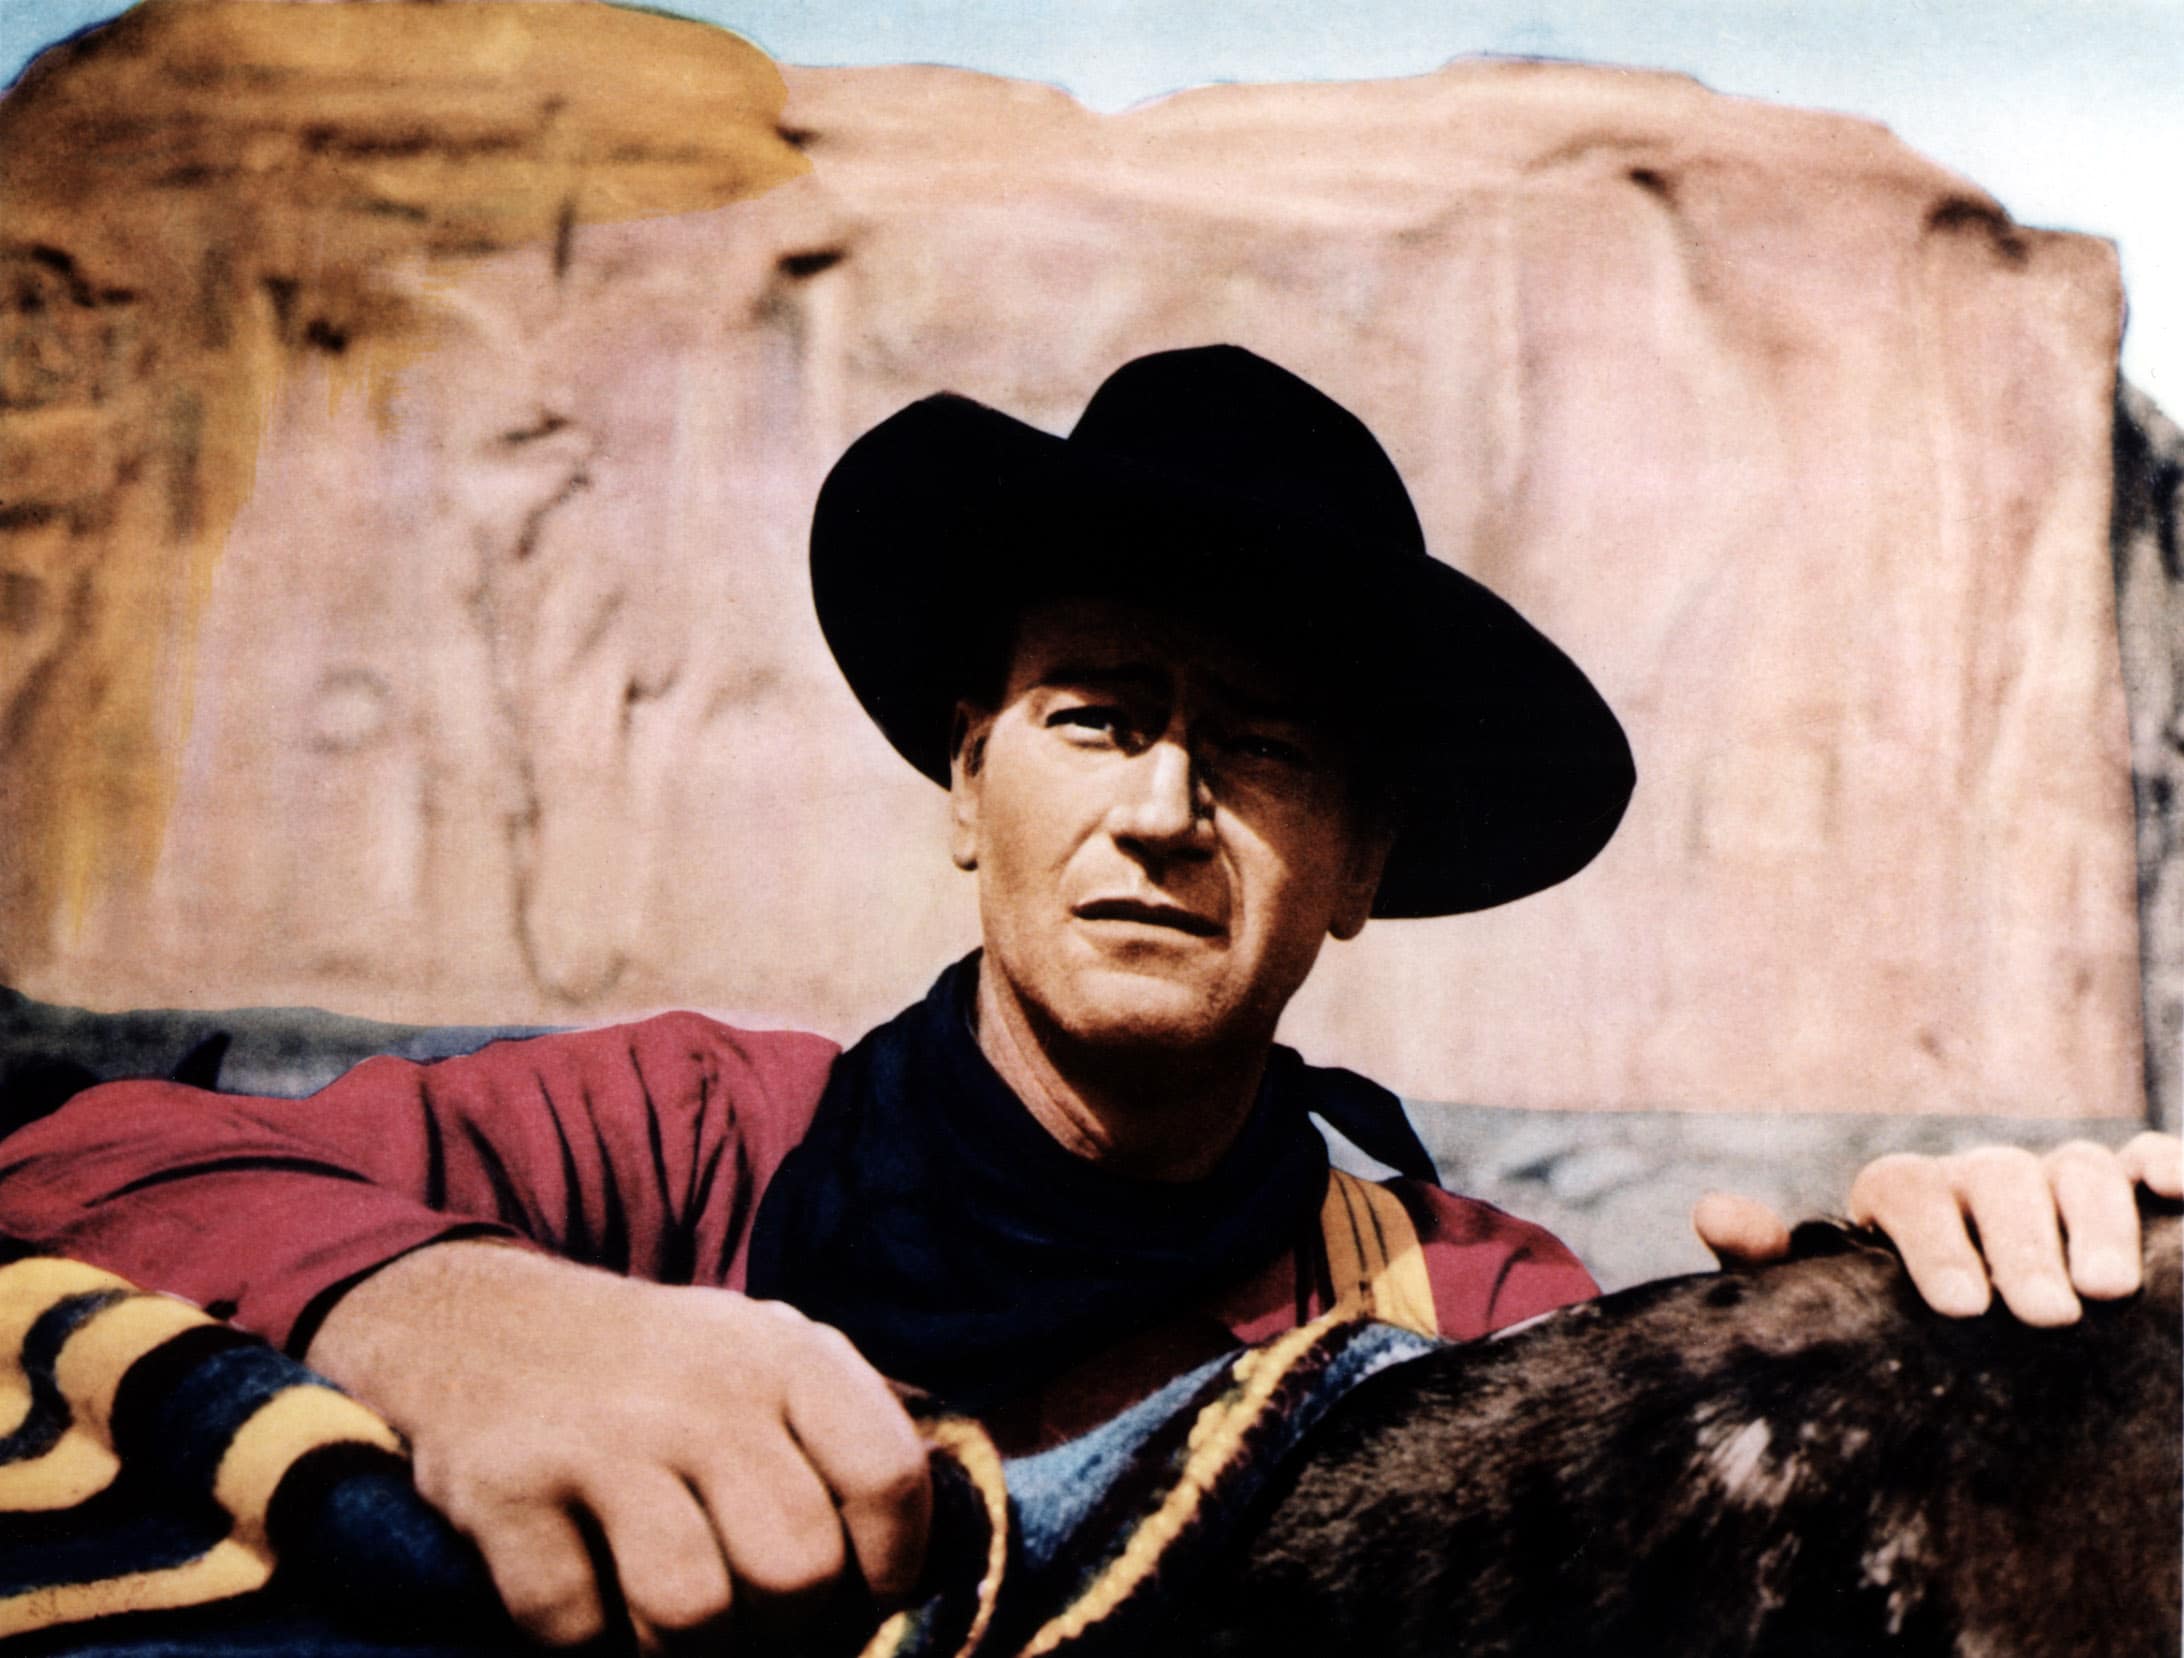 THE SEARCHERS, John Wayne, 1956 